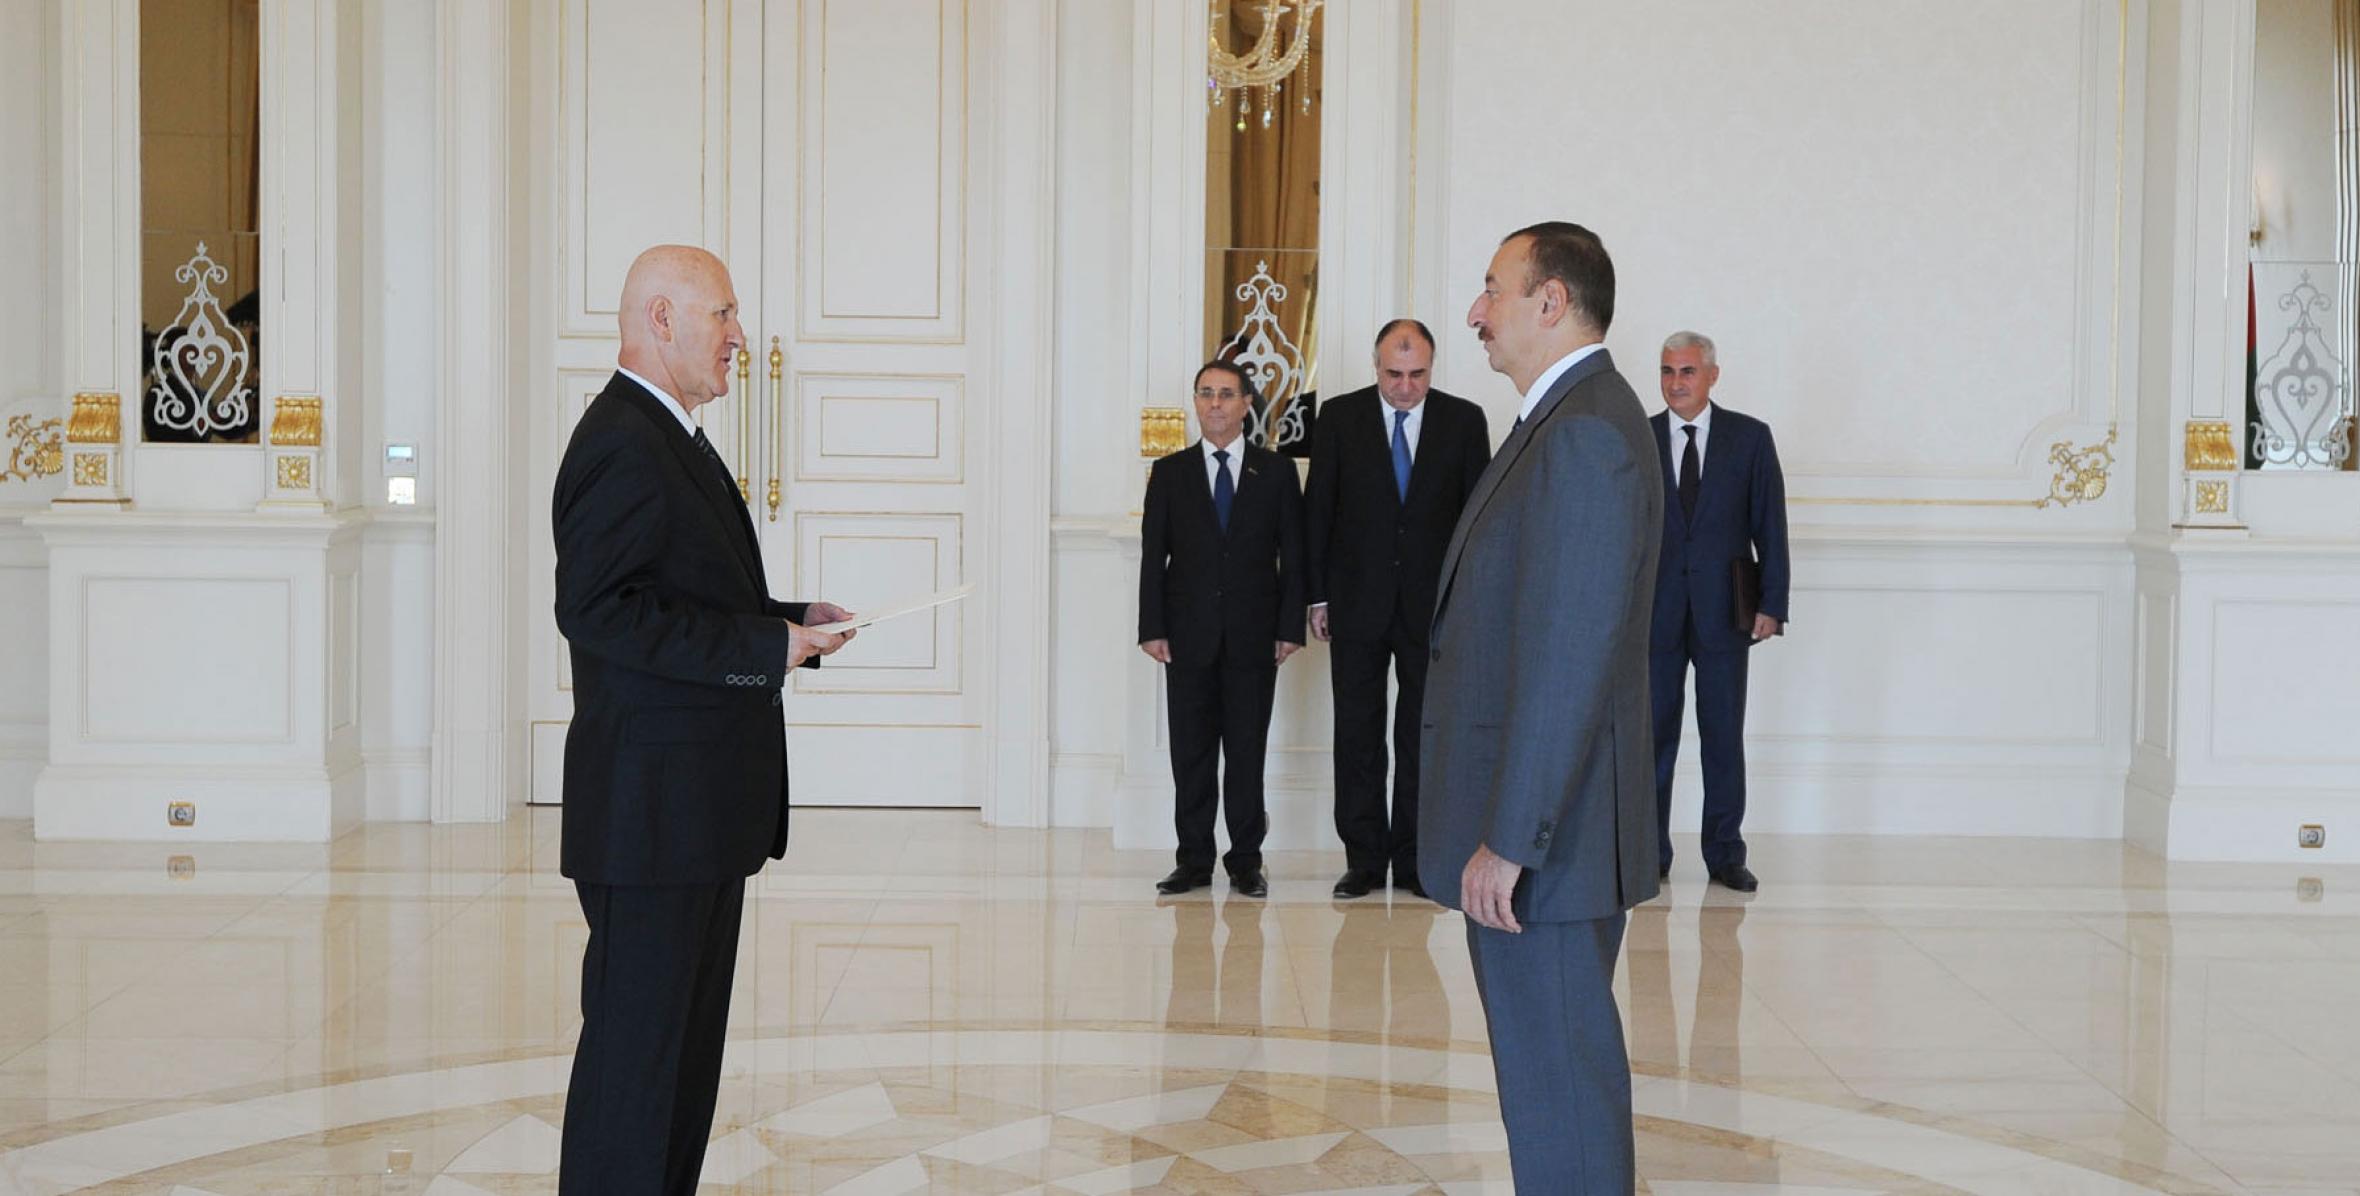 Ilham Aliyev received credentials of newly-appointed Montenegrin Ambassador in Azerbaijan, Ramo Bralic